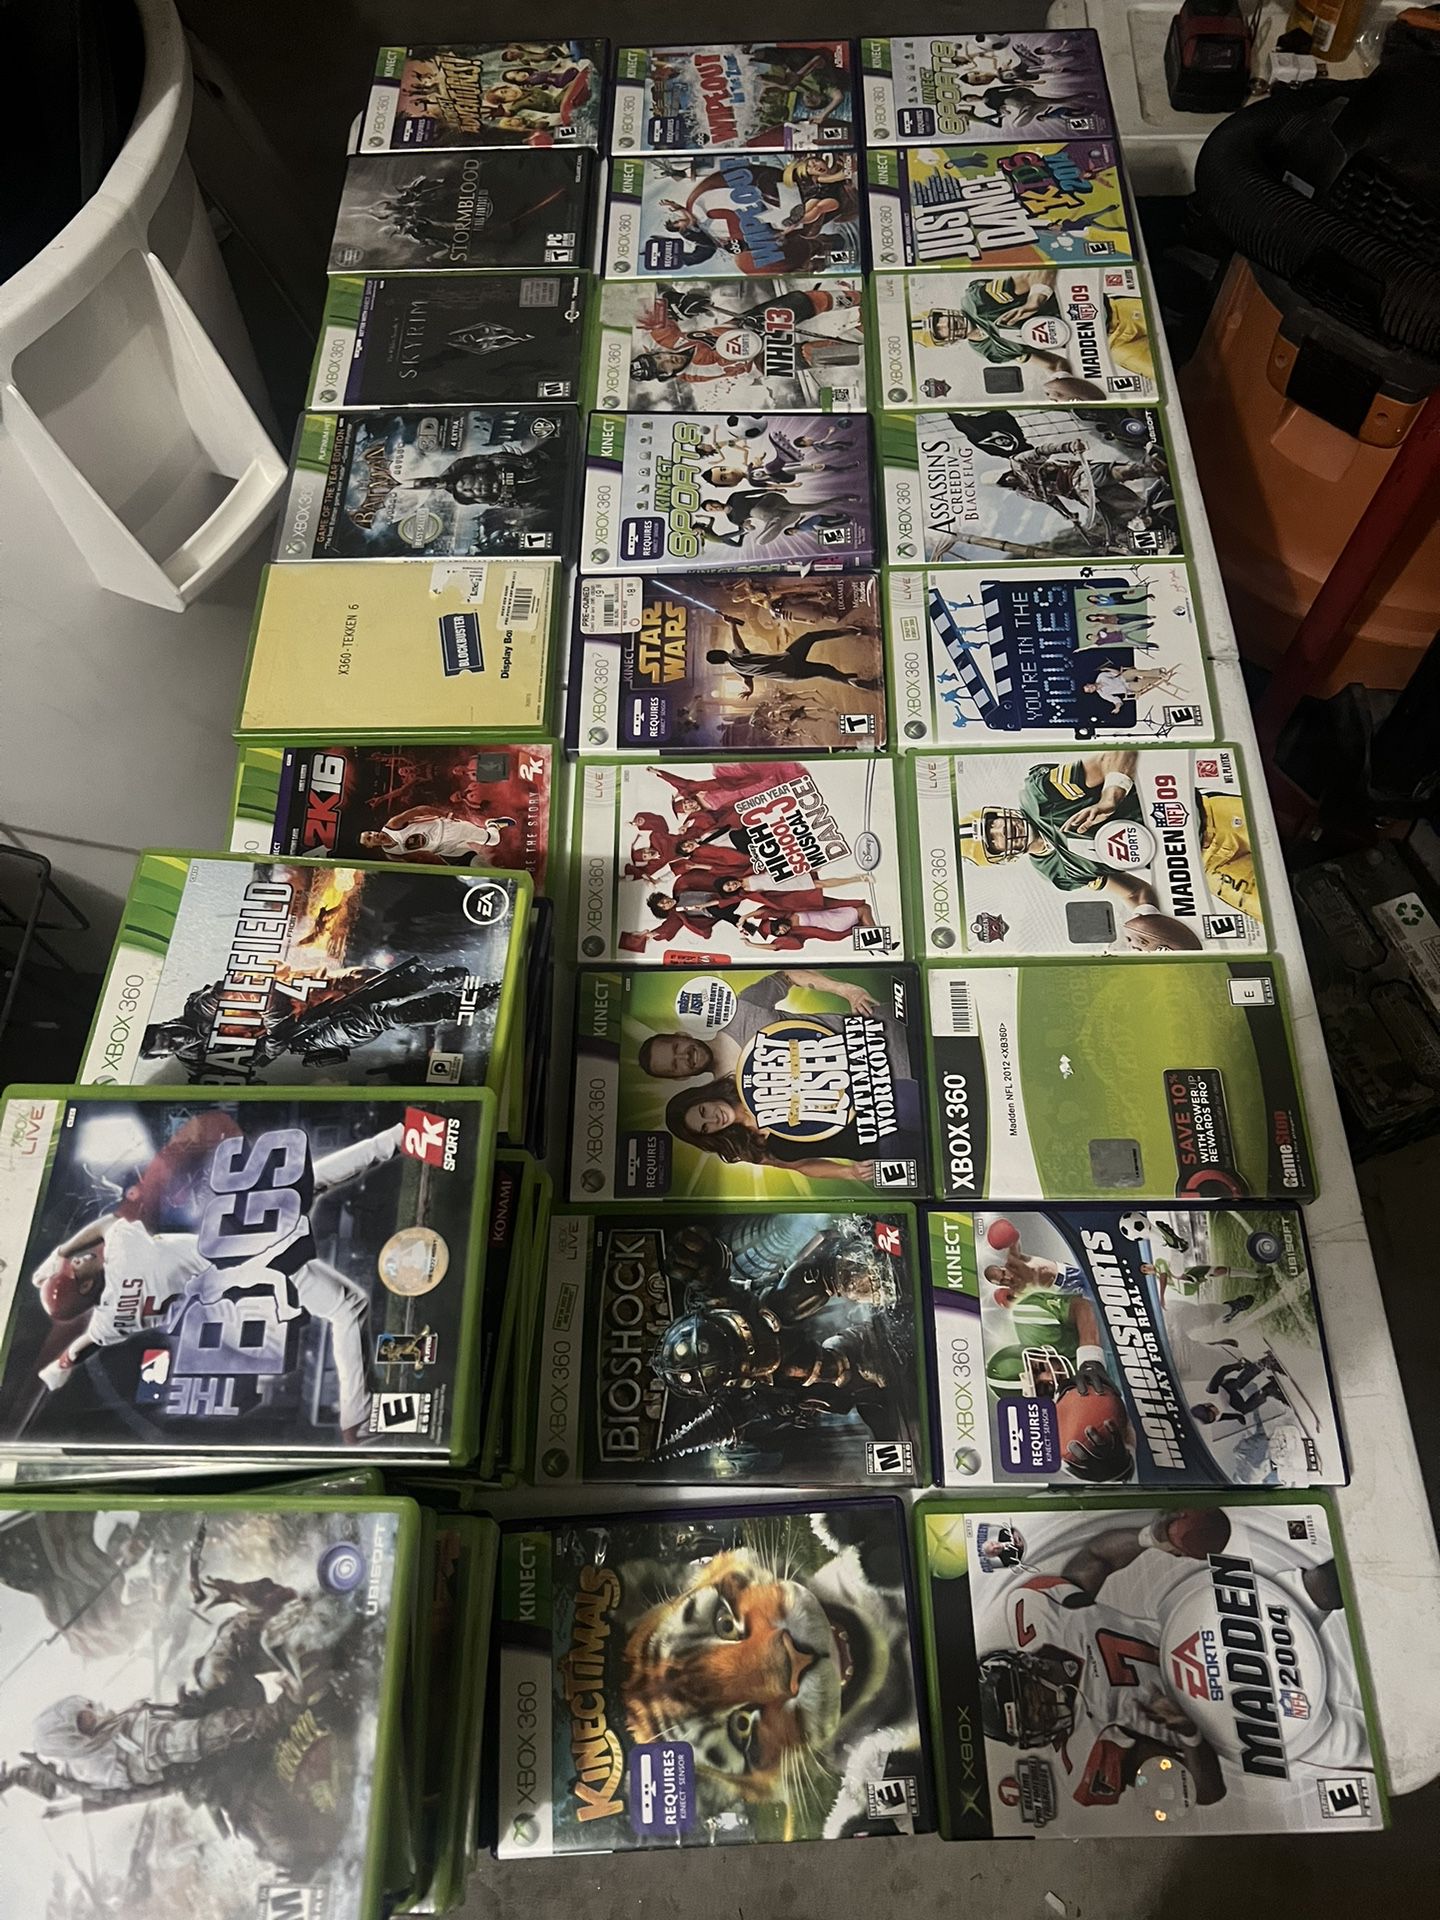 Xbox 360 Games